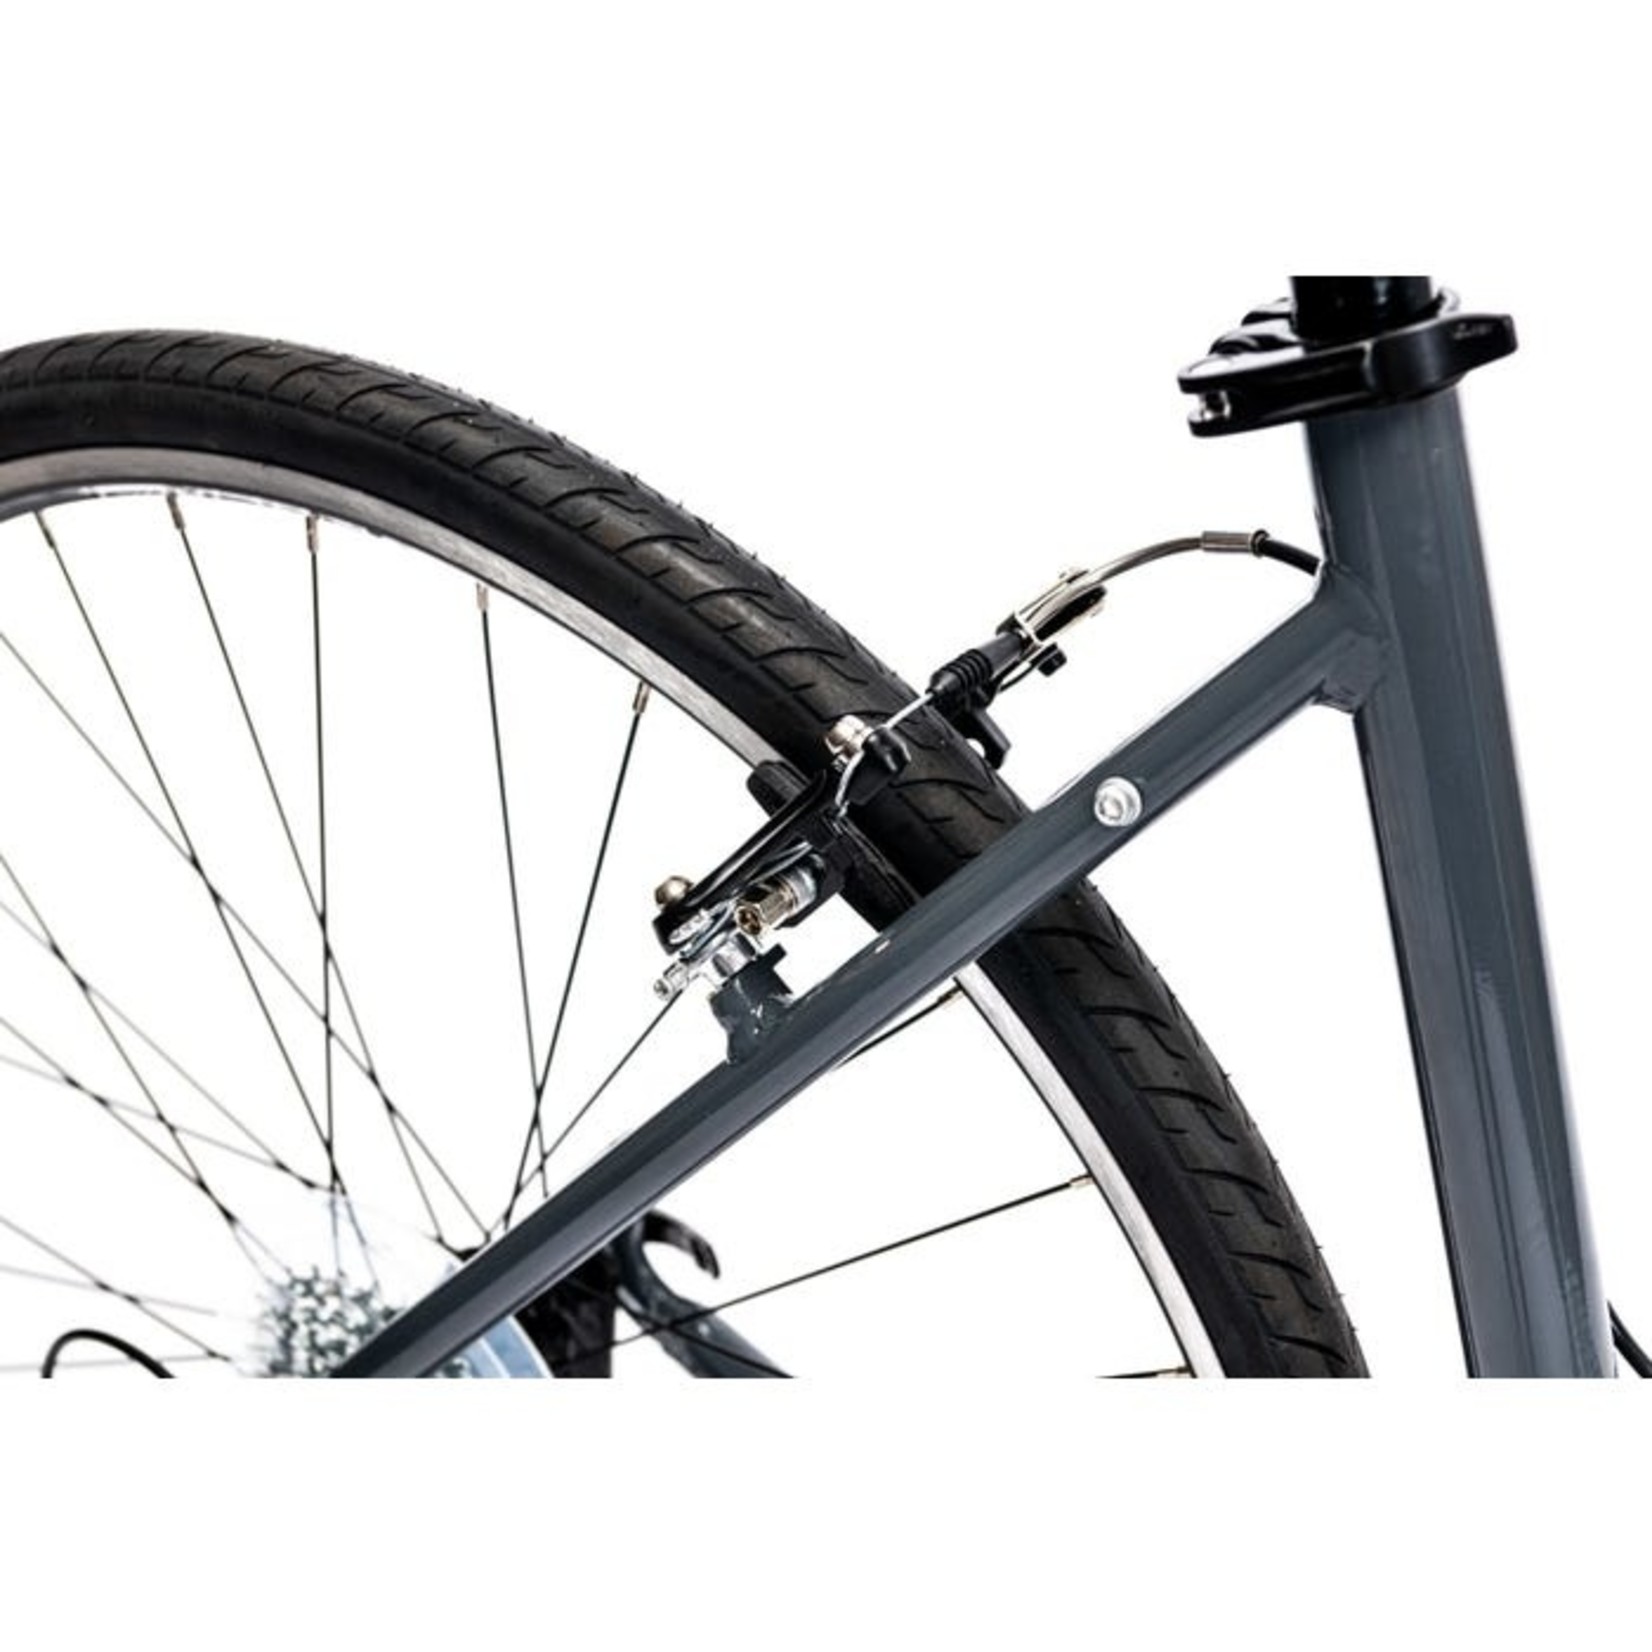 Merida Merida 2021 Speeder 10 V Women's Road Bike - Glossy Grey(Black/Teal) - Xsmall